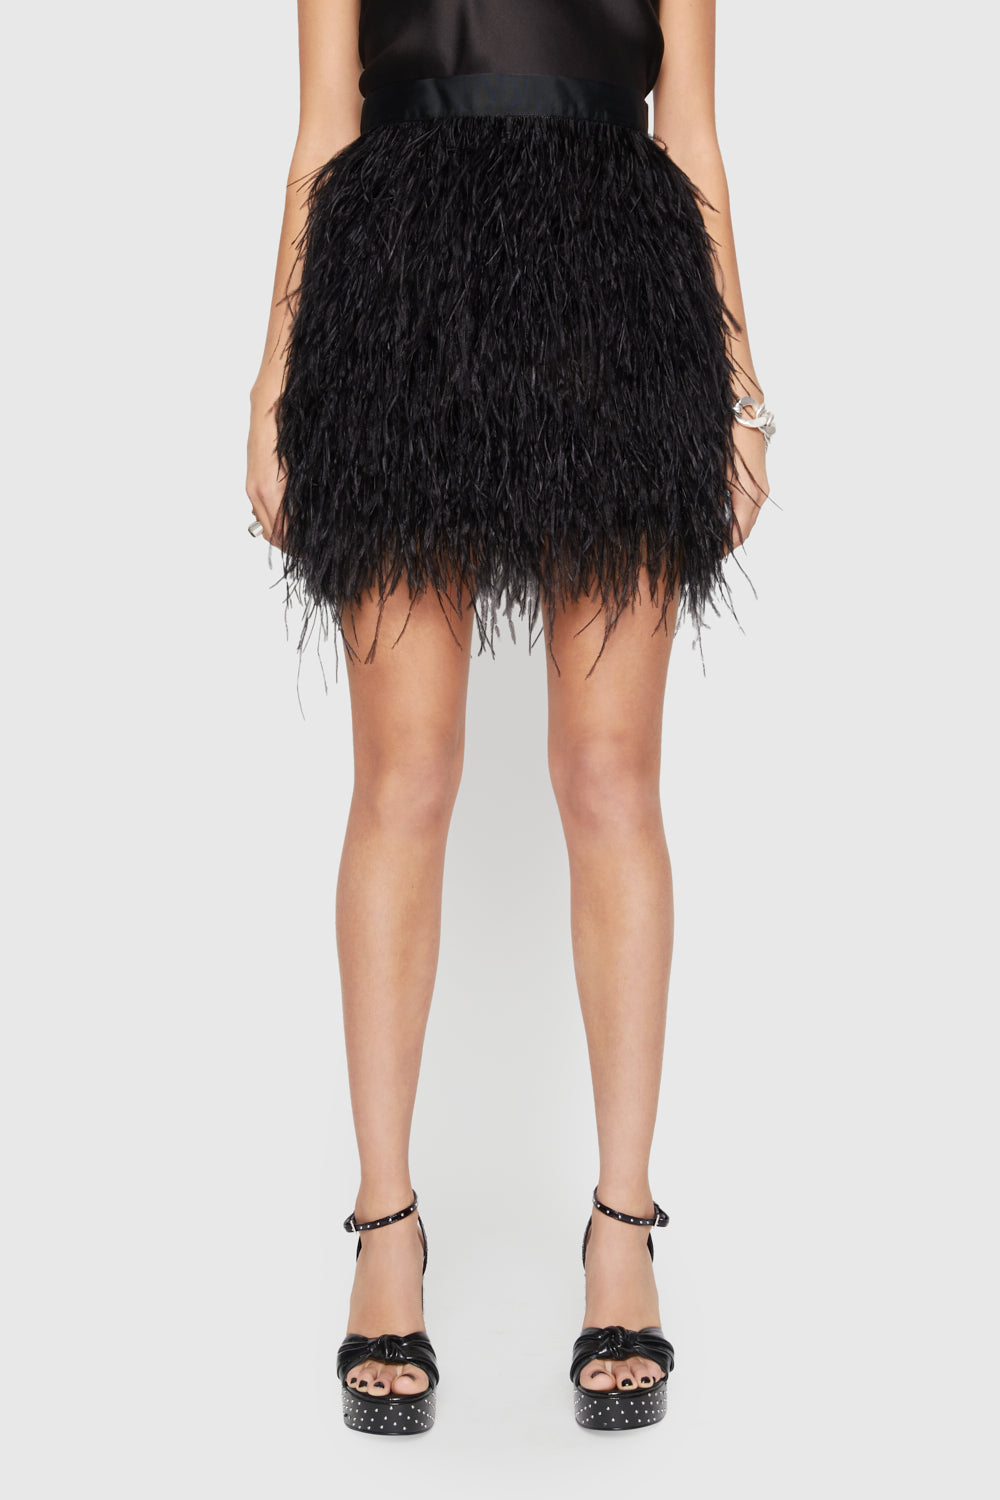 Sequin Sensation High Waisted Sequin Feather Mini Skirt (Black